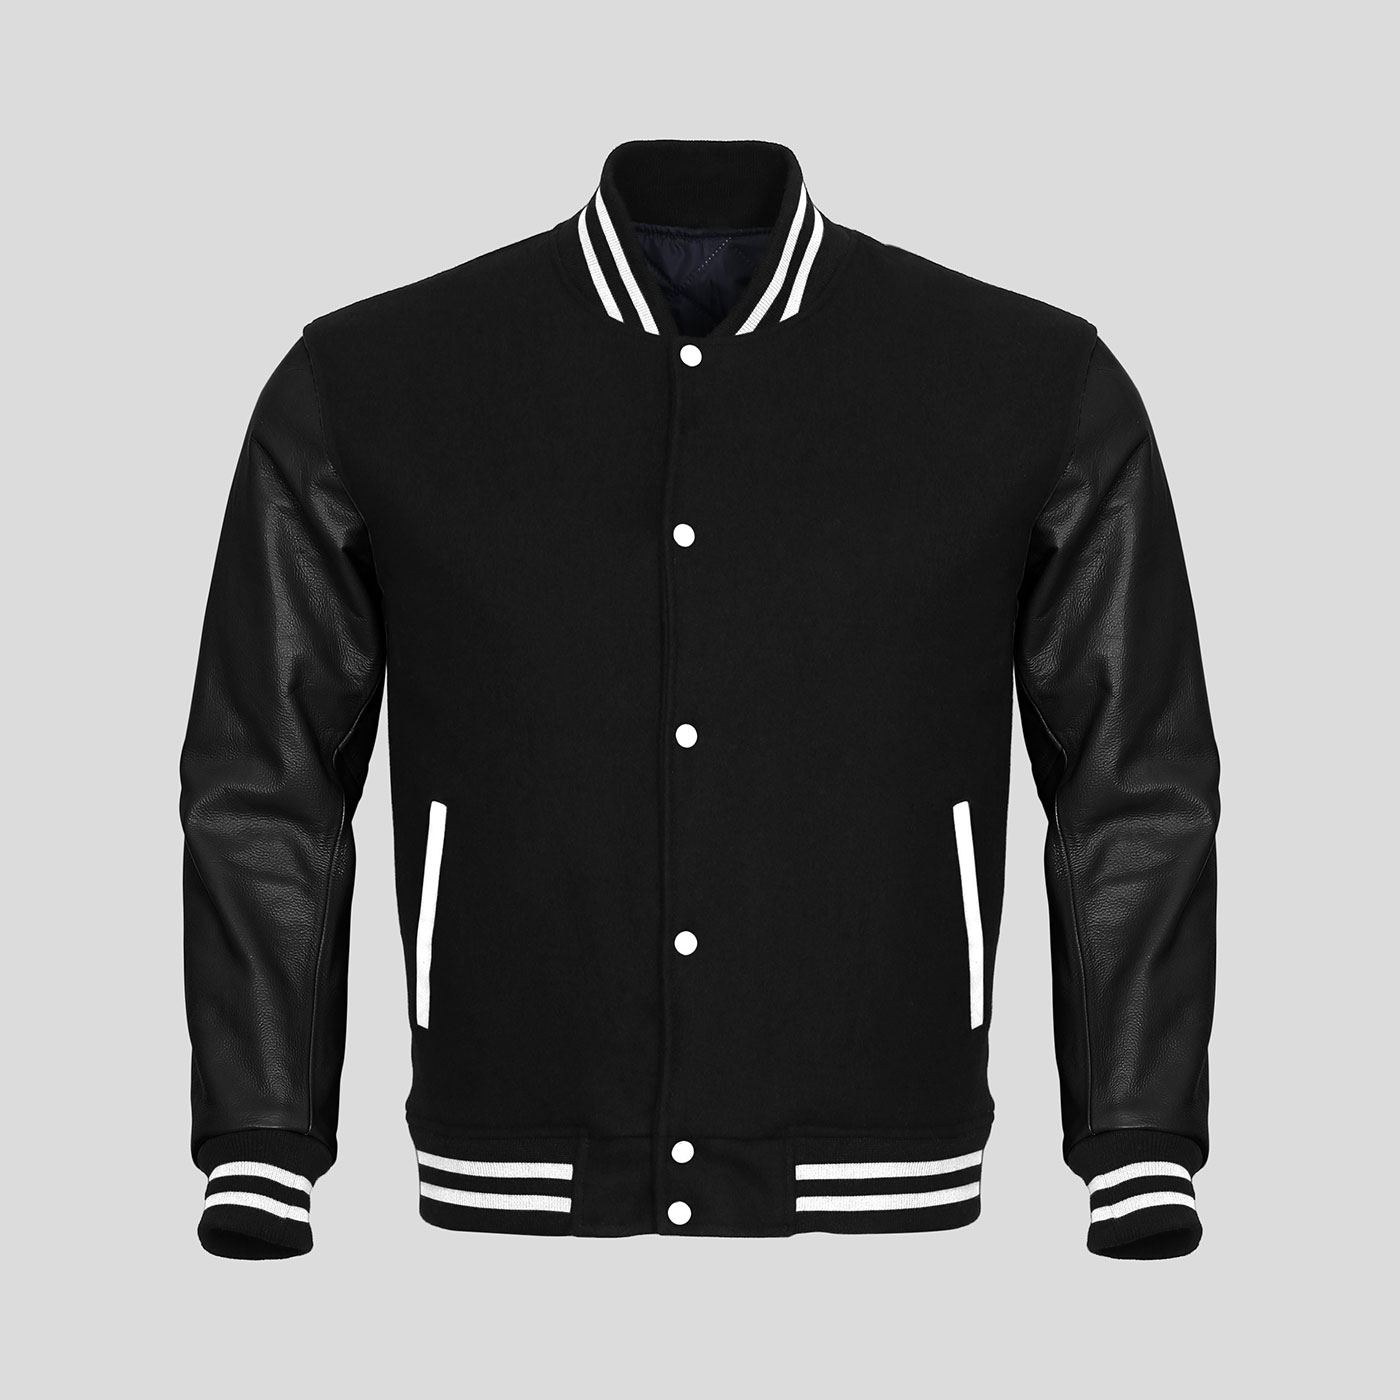 Classic Black Varsity Jacket